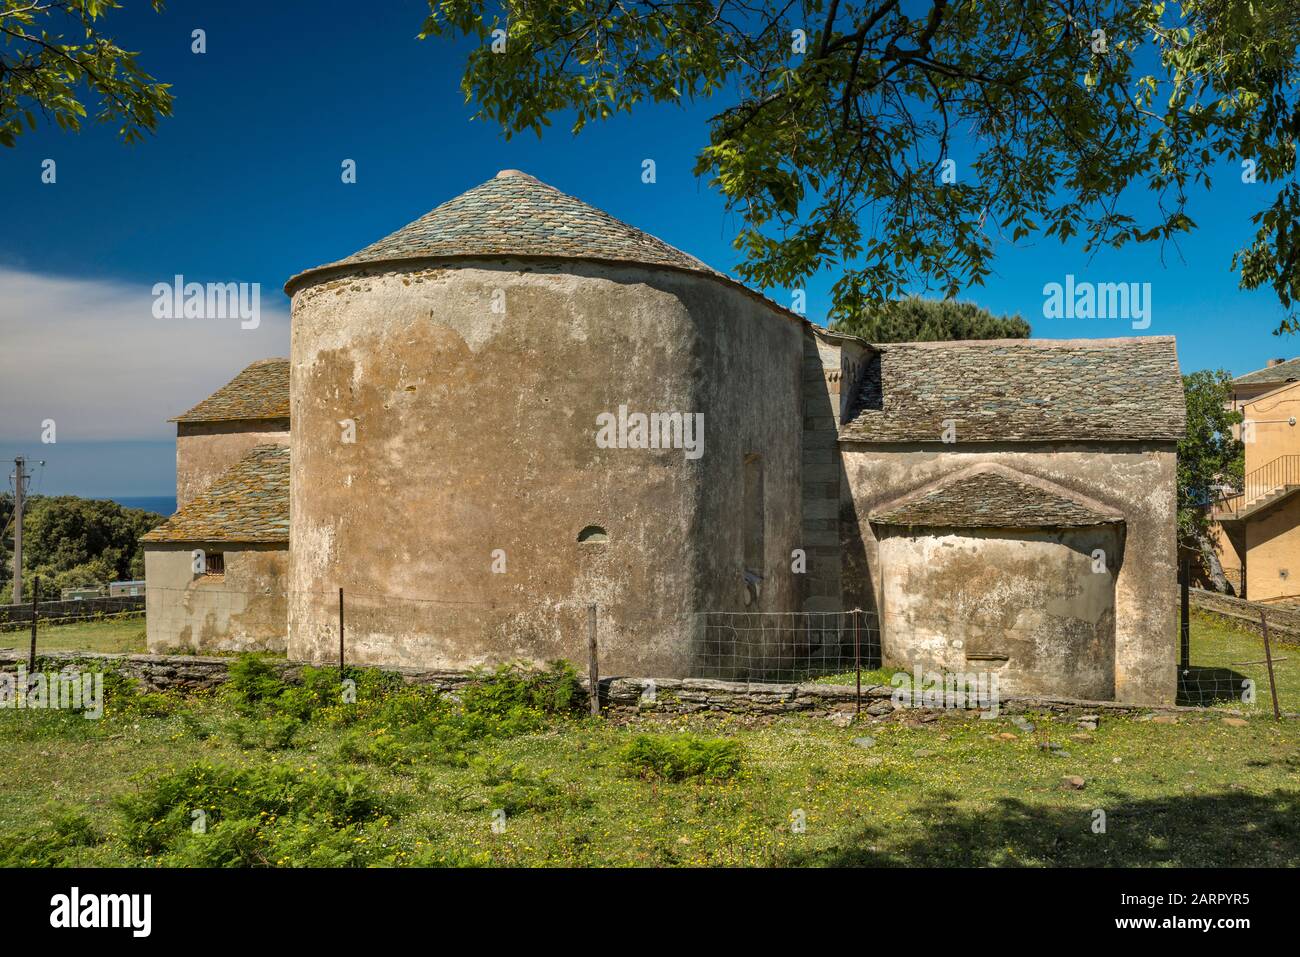 Eglise Santa Maria Assunta, 12th century church, Romanesque-Pisan style, in village of Canari, Cap Corse, Haute-Corse, Corsica, France Stock Photo